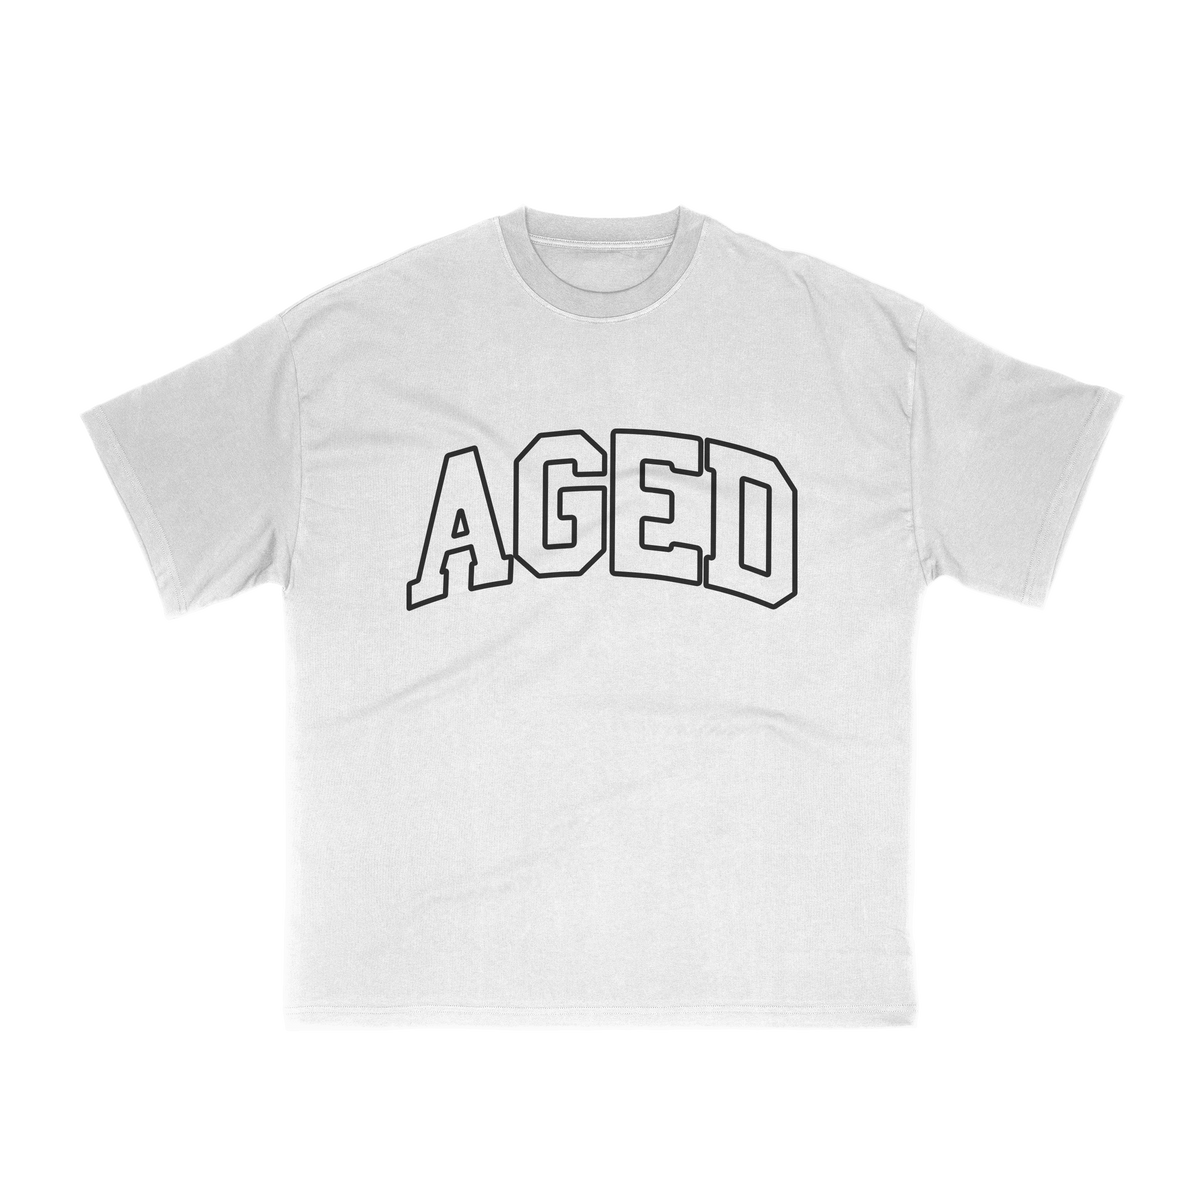 Camiseta Aged Archive "Classic Tee" Branco